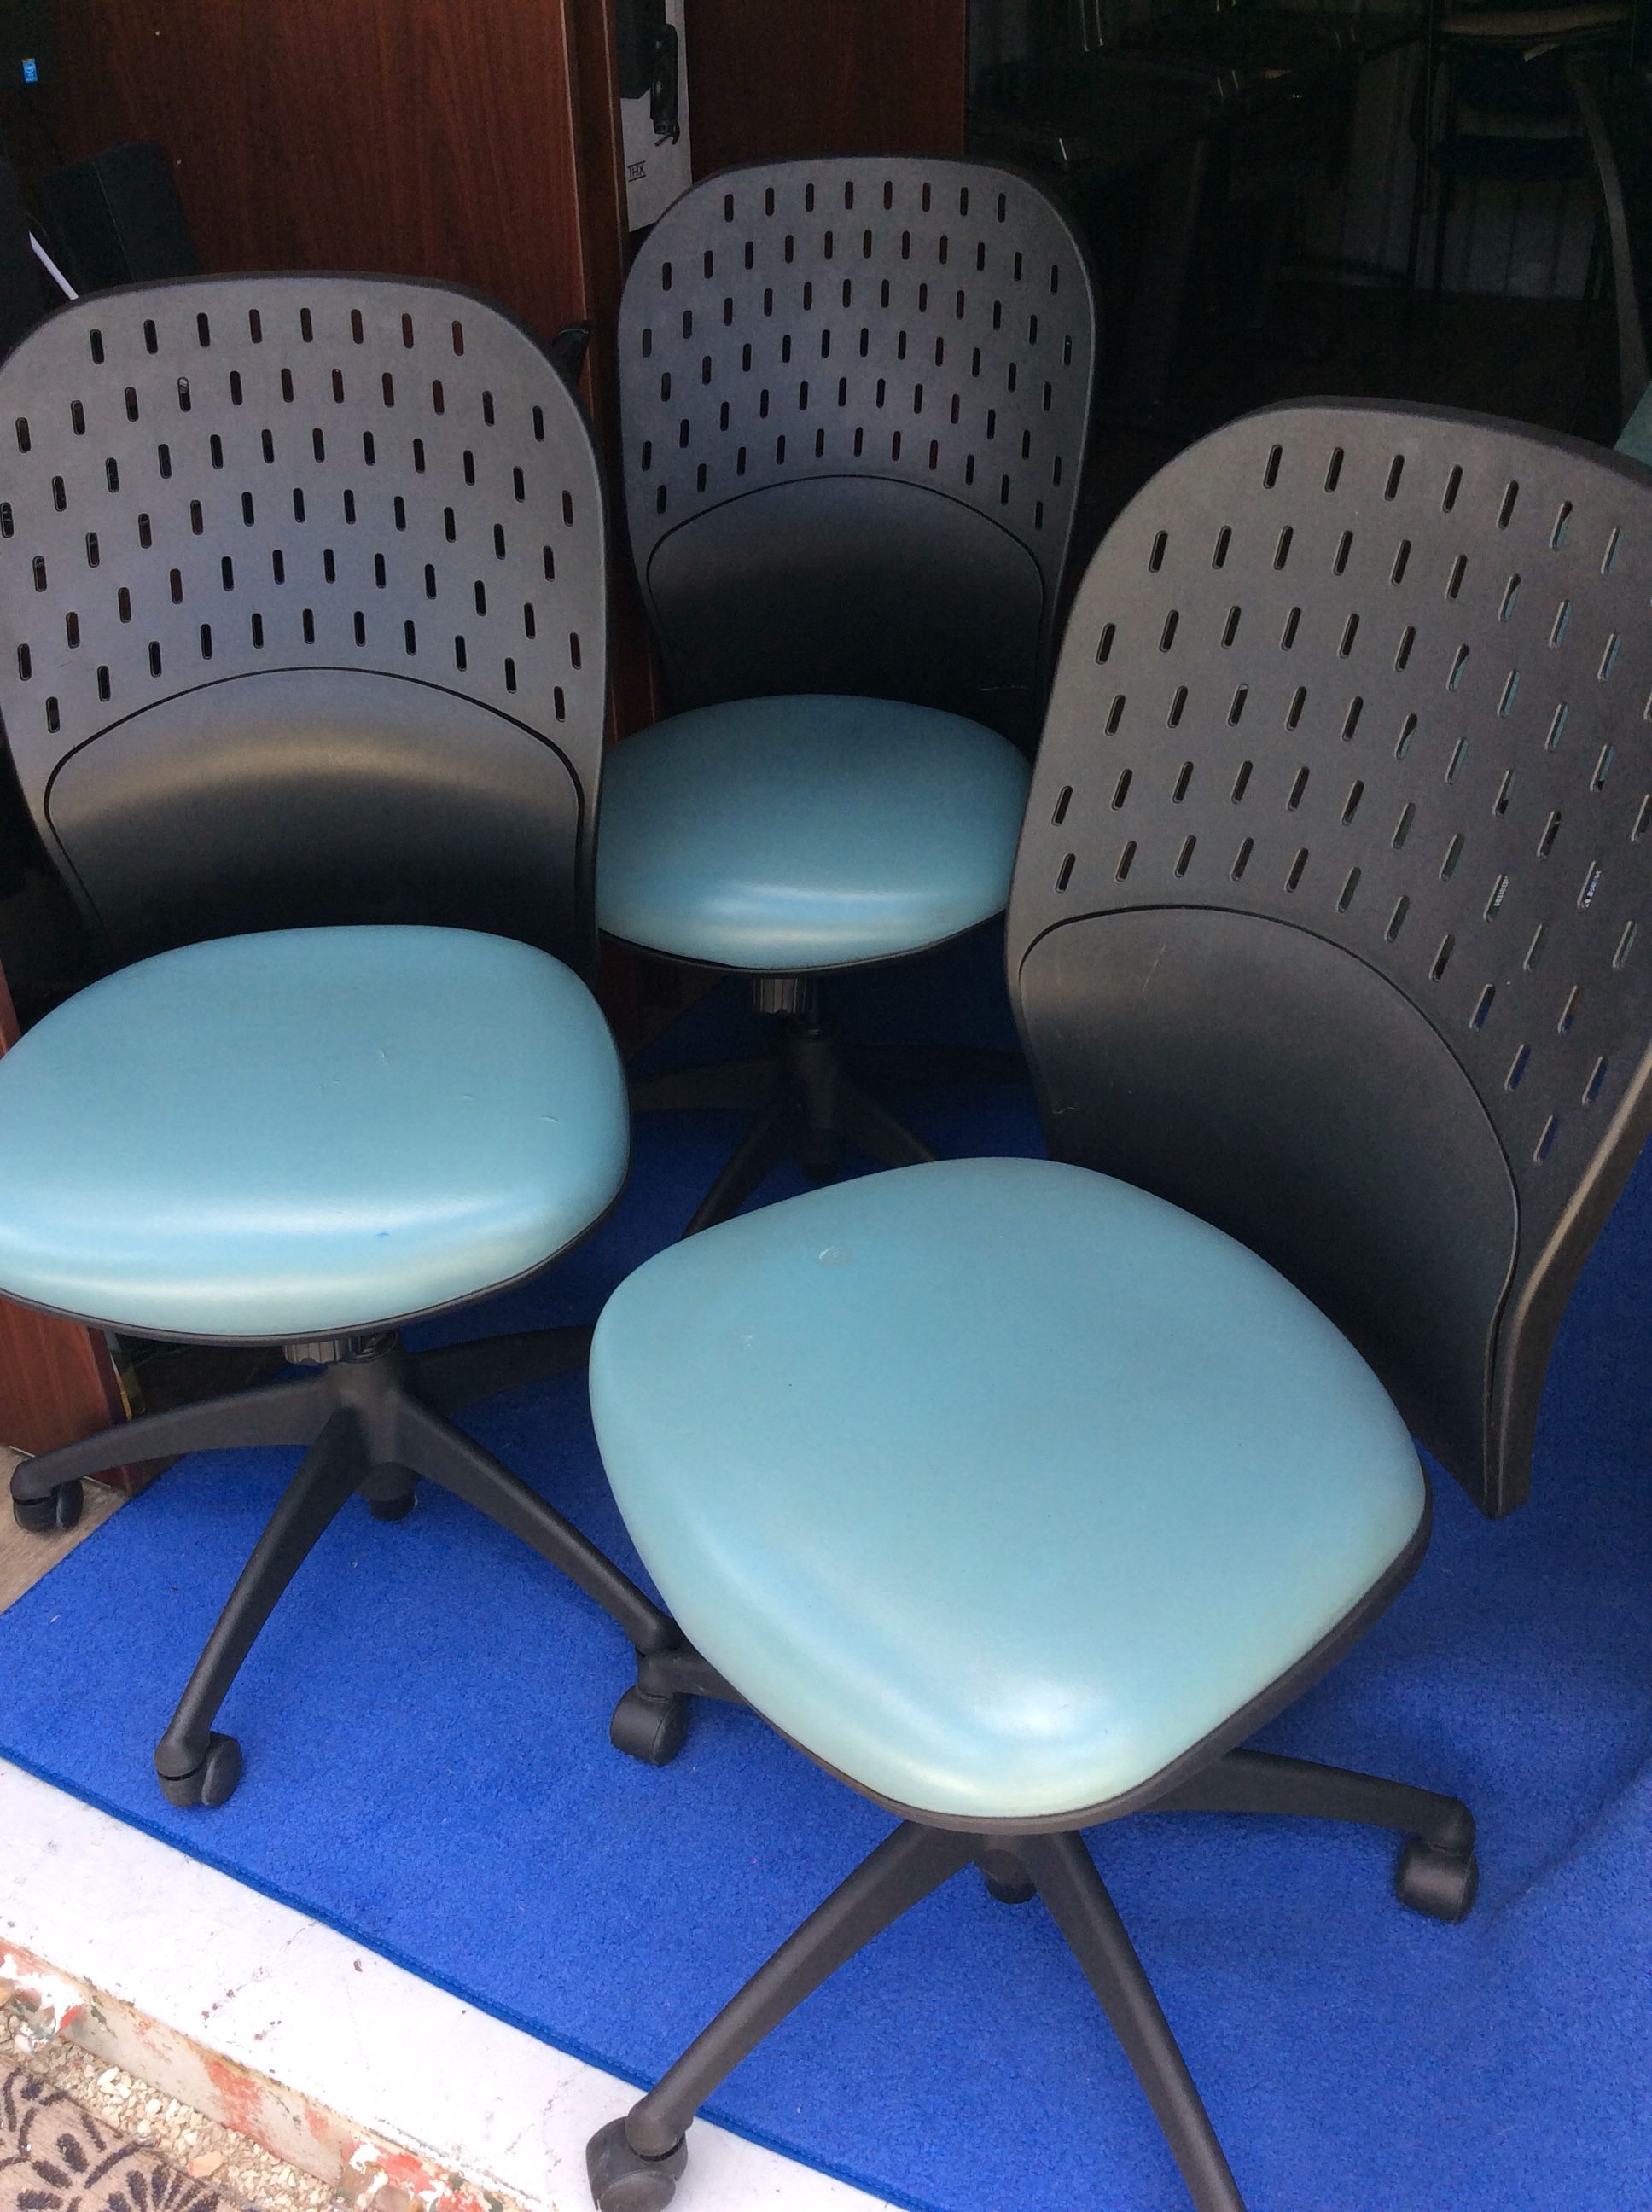 4 -Ergonomic Office Chair